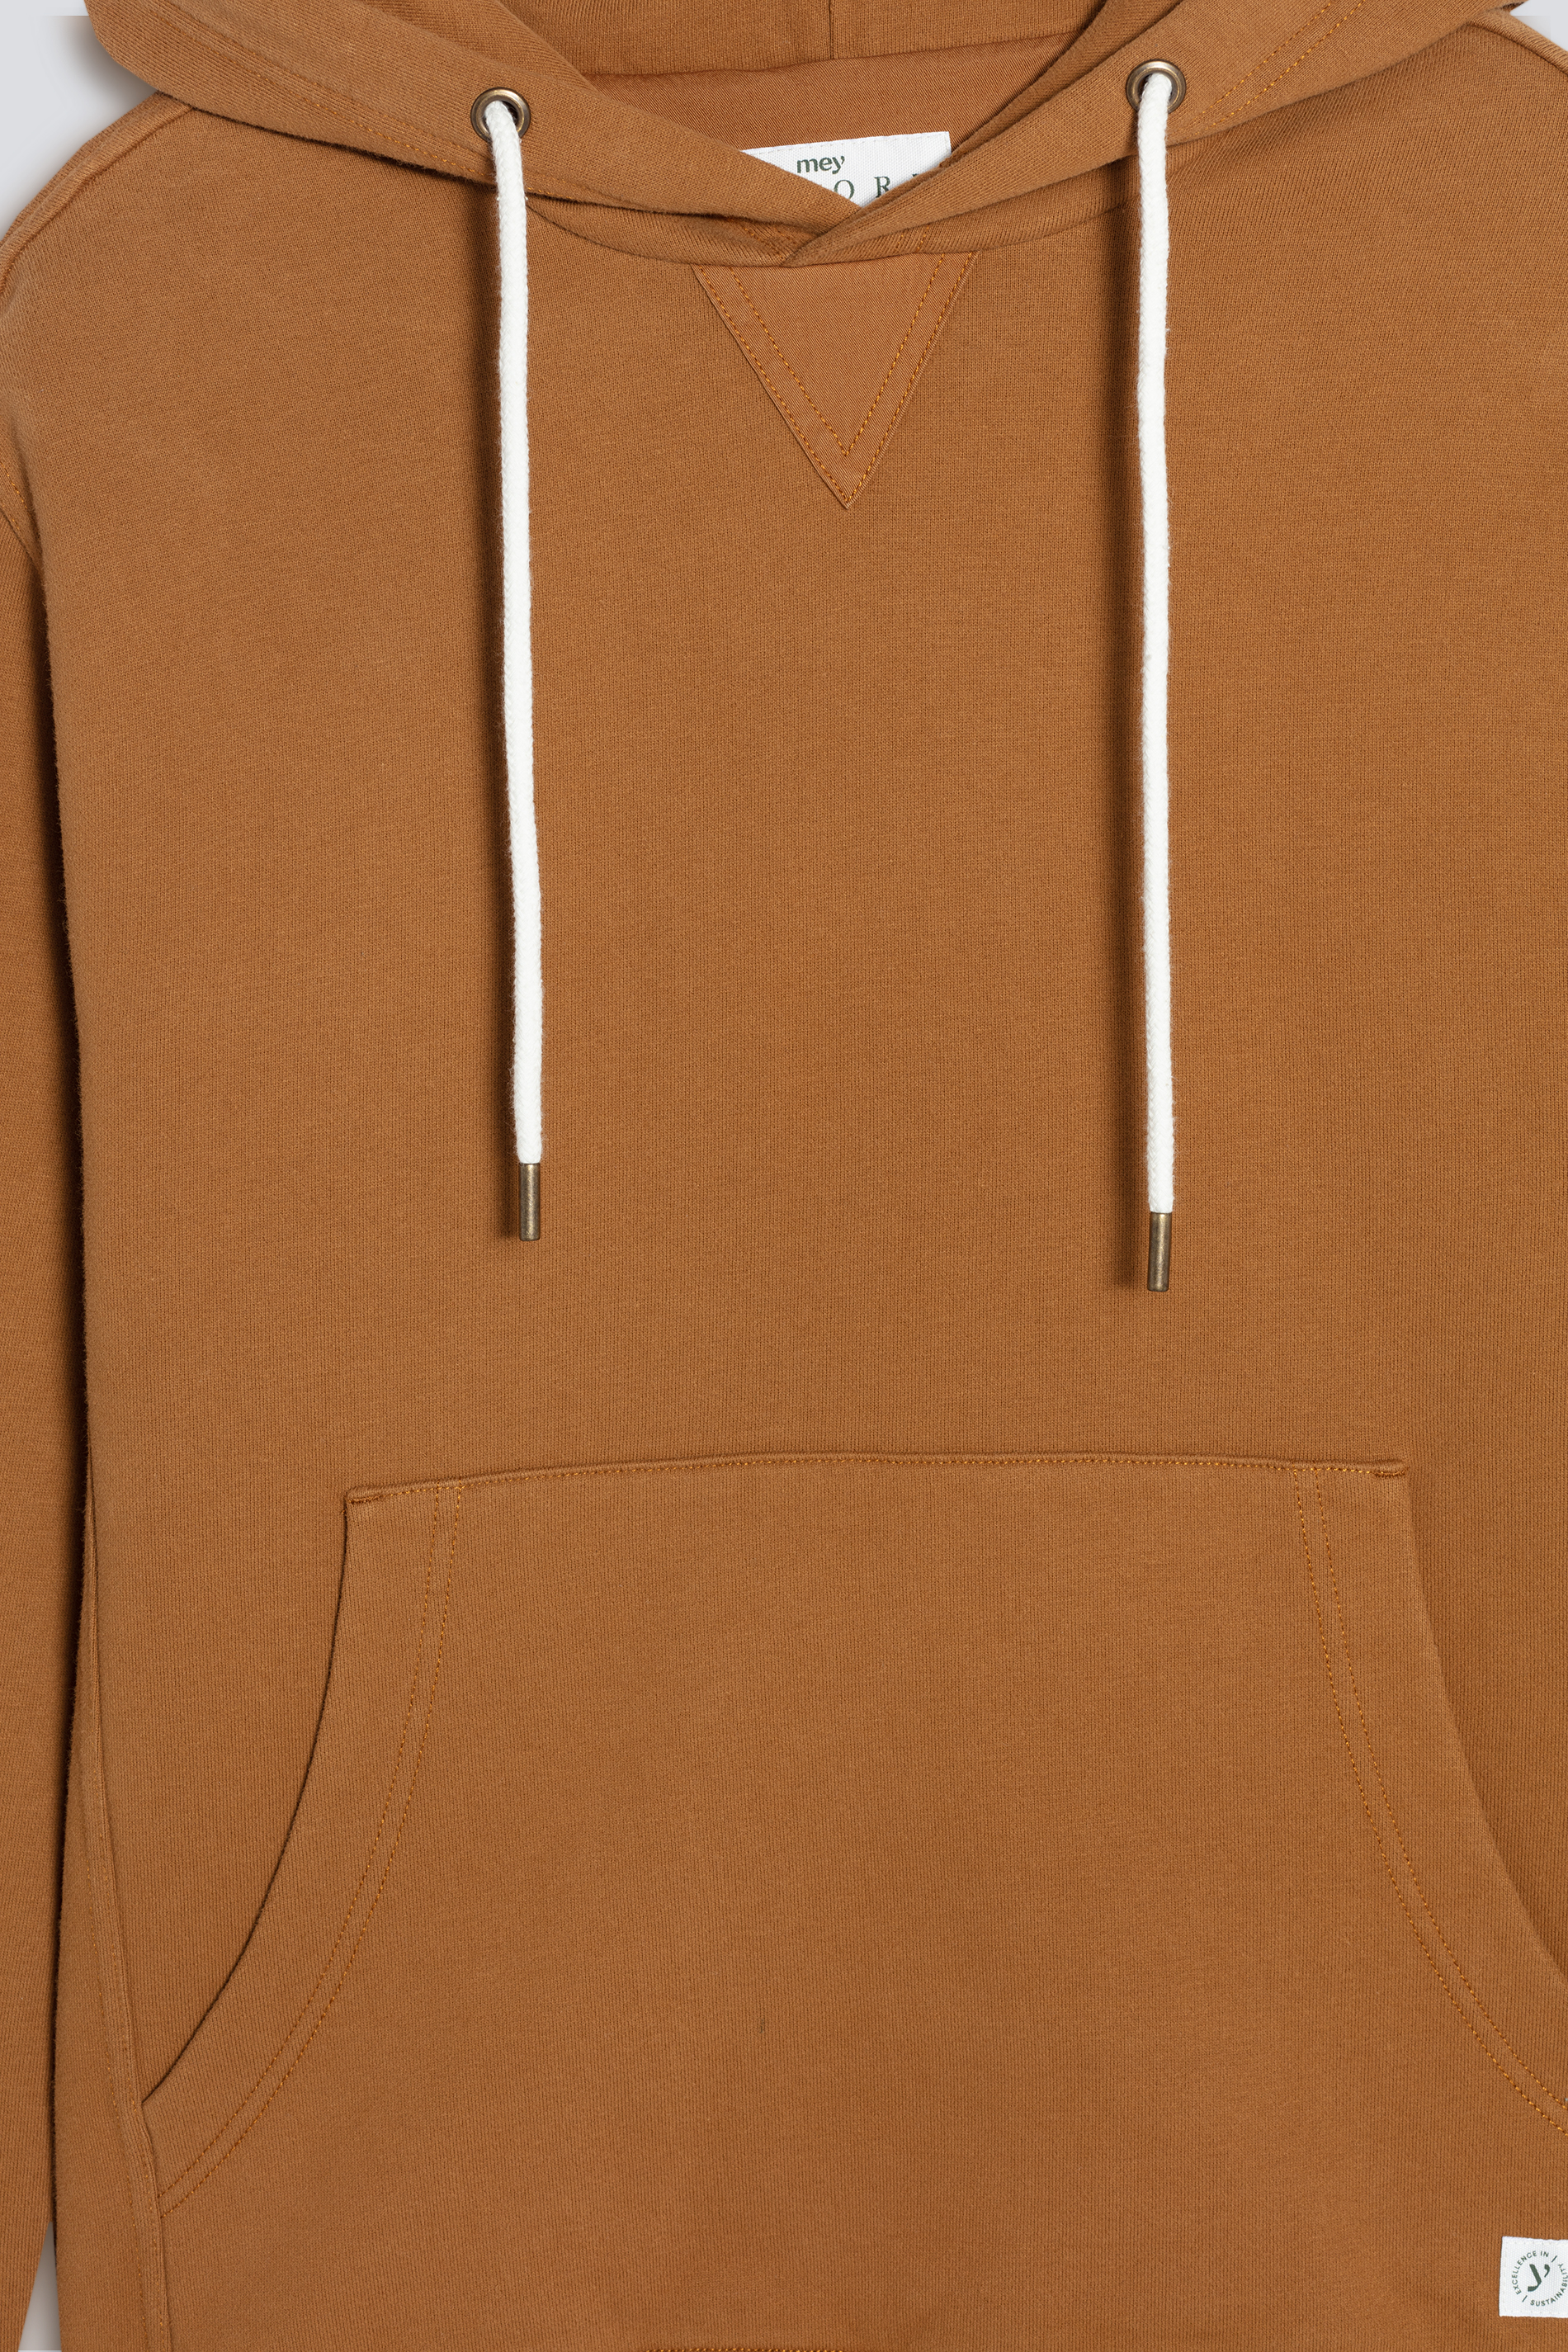 Hoodie sweatshirt Rubber Serie Soft Felpa Detail View 02 | mey®